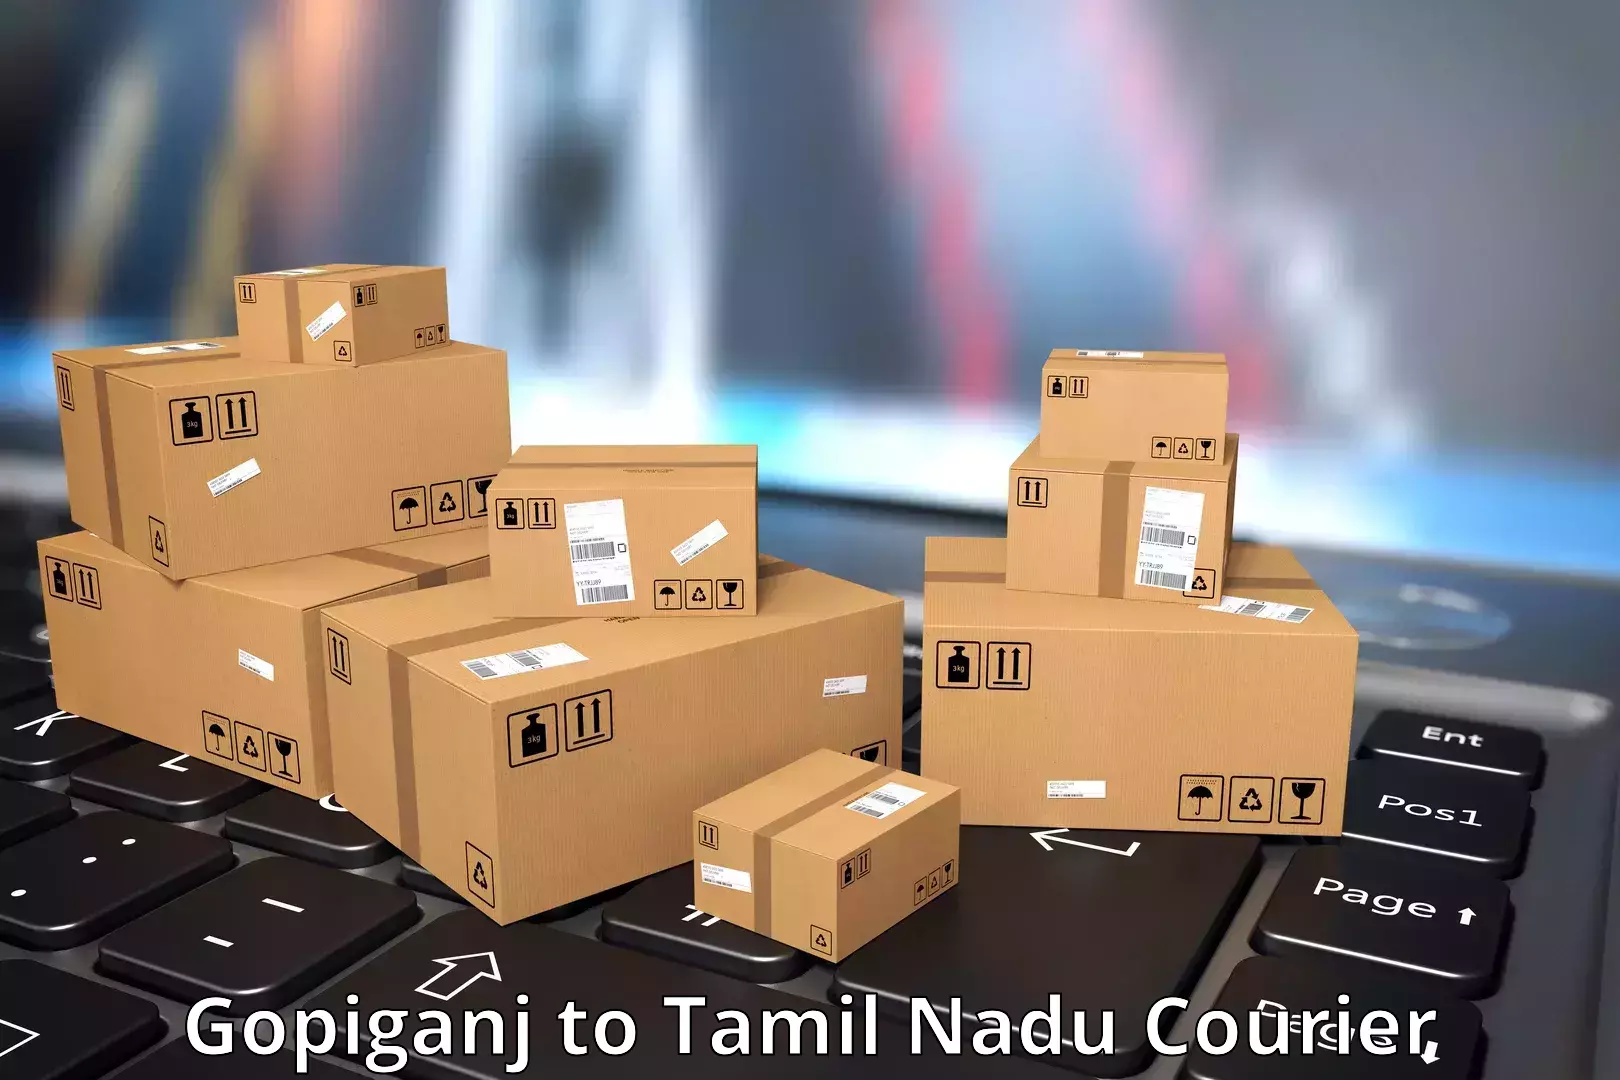 Round-the-clock parcel delivery Gopiganj to Udumalpet